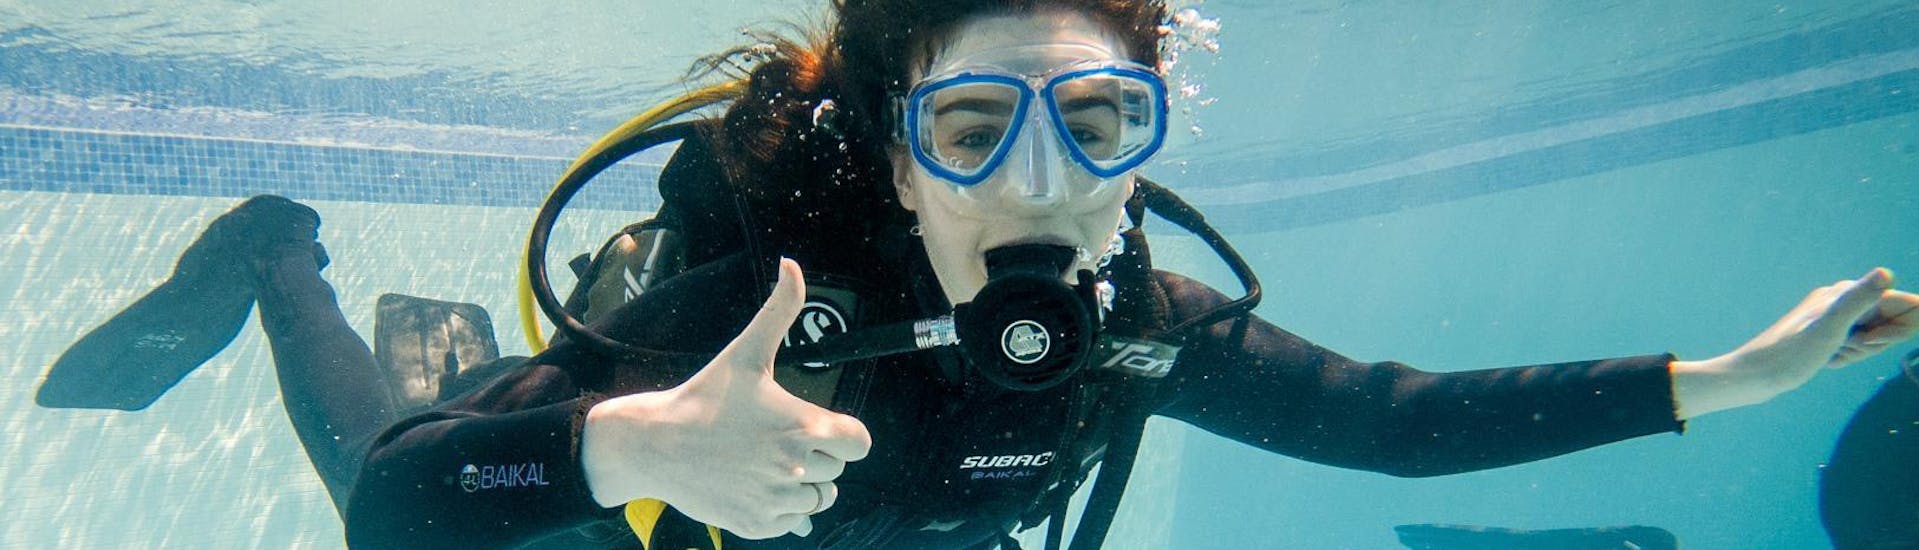 scuba-diving-course-for-beginners-padi-scuba-diver-aqua-marine-diving-tenerife-hero